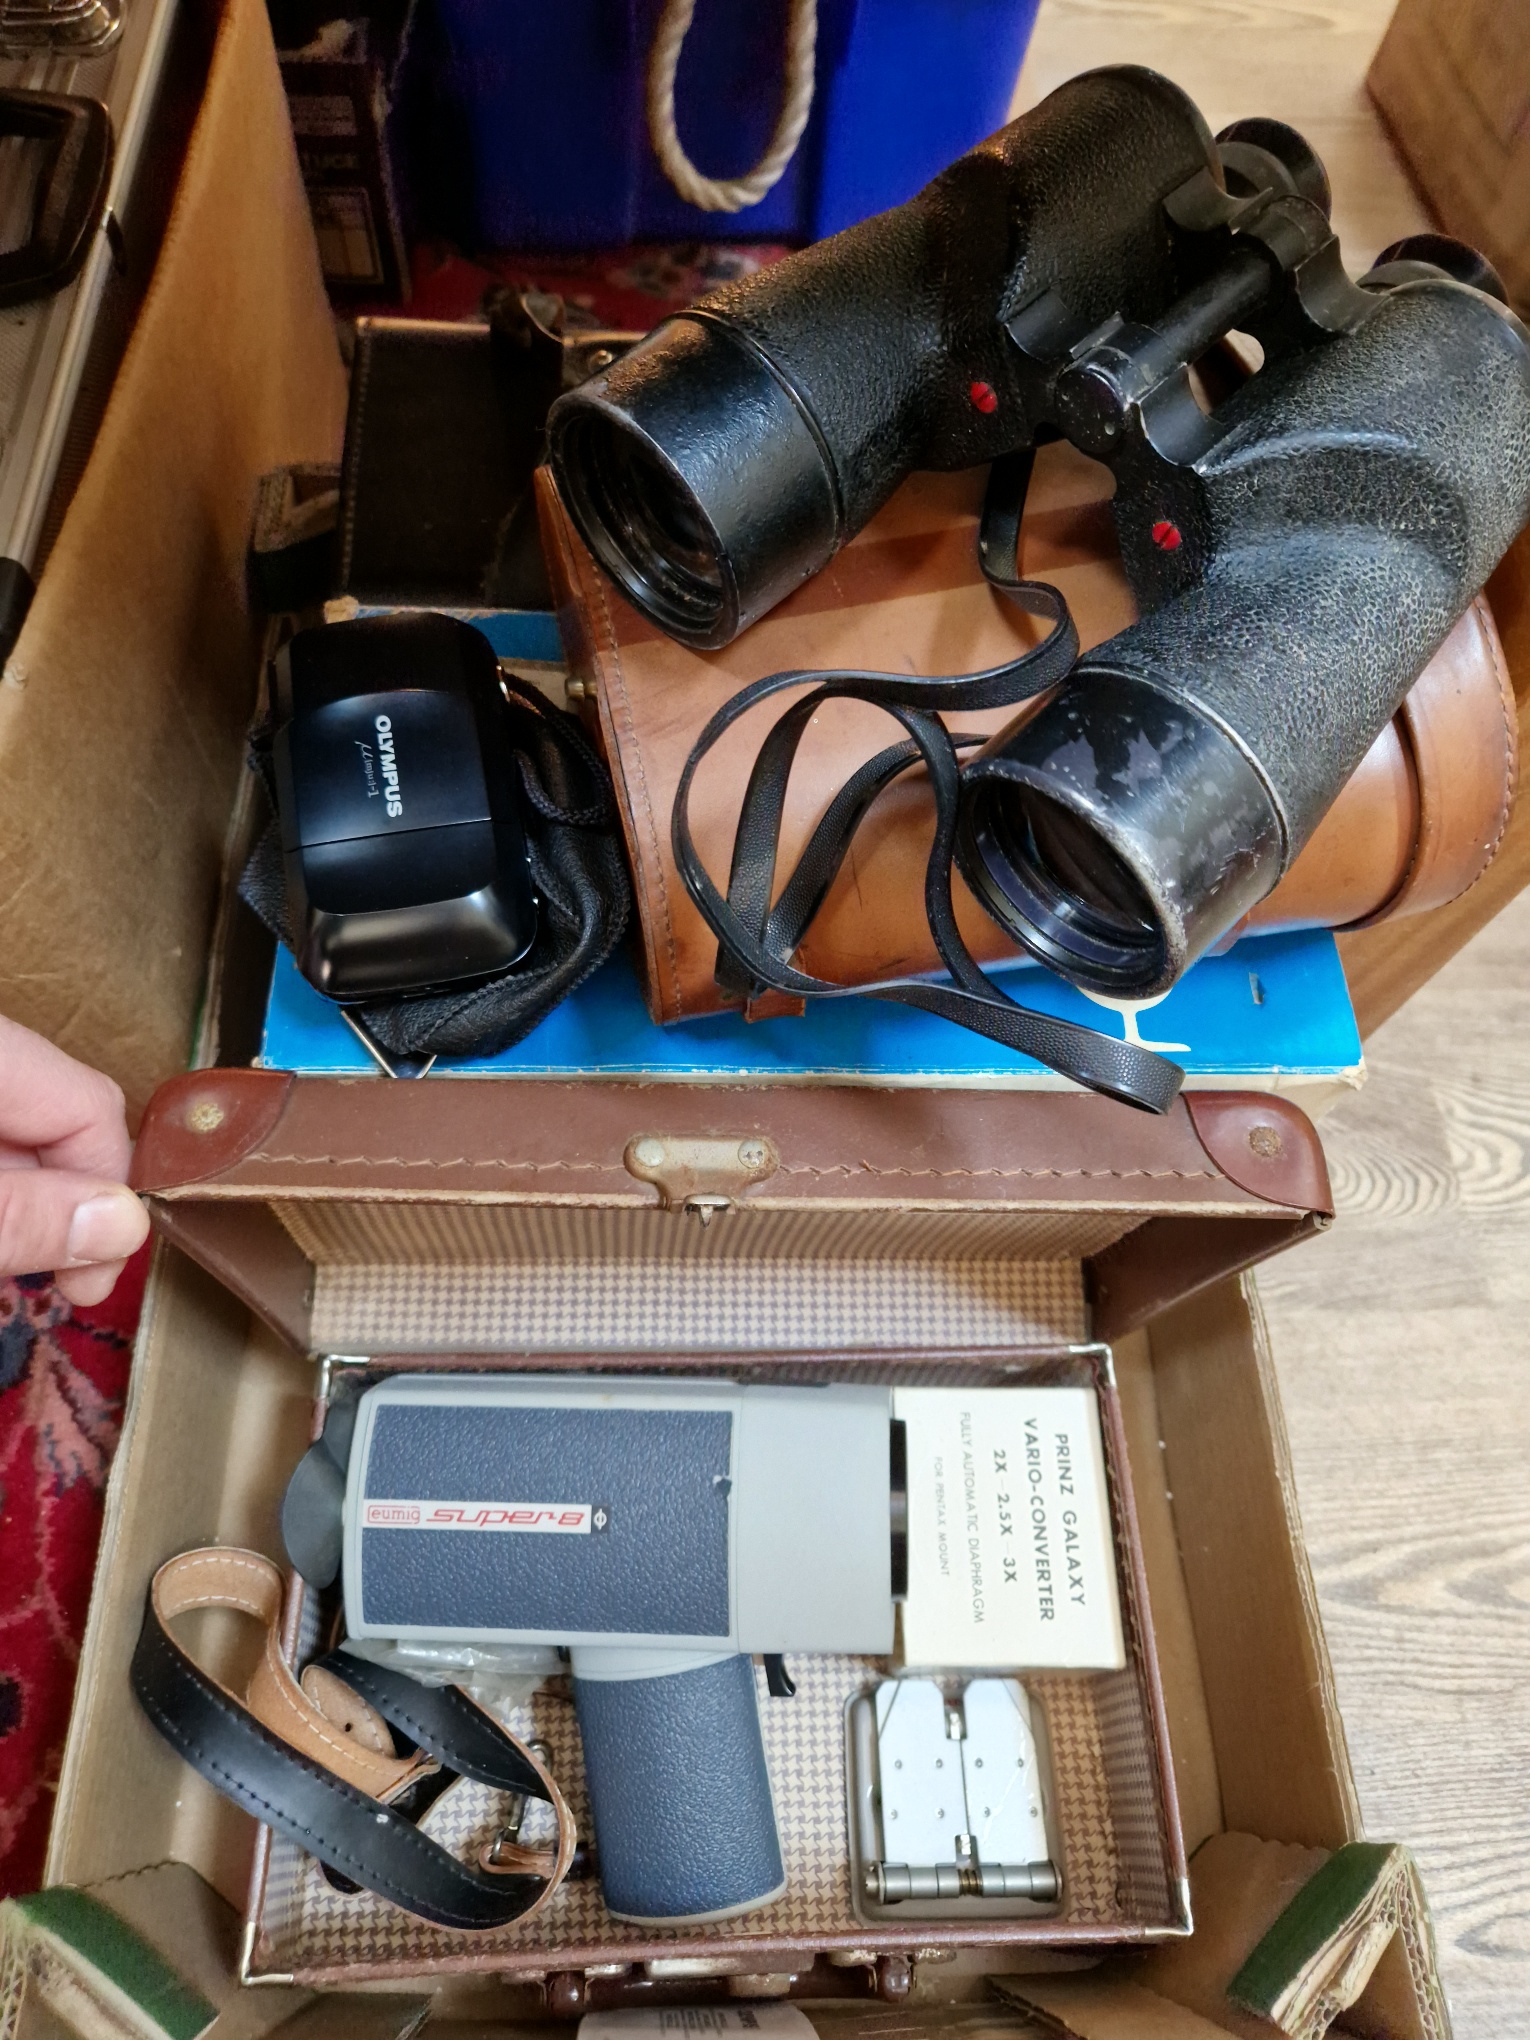 Assorted camera equipment comprising a Minolta X700 35mm camera, a pair of Canadian binoculars, a